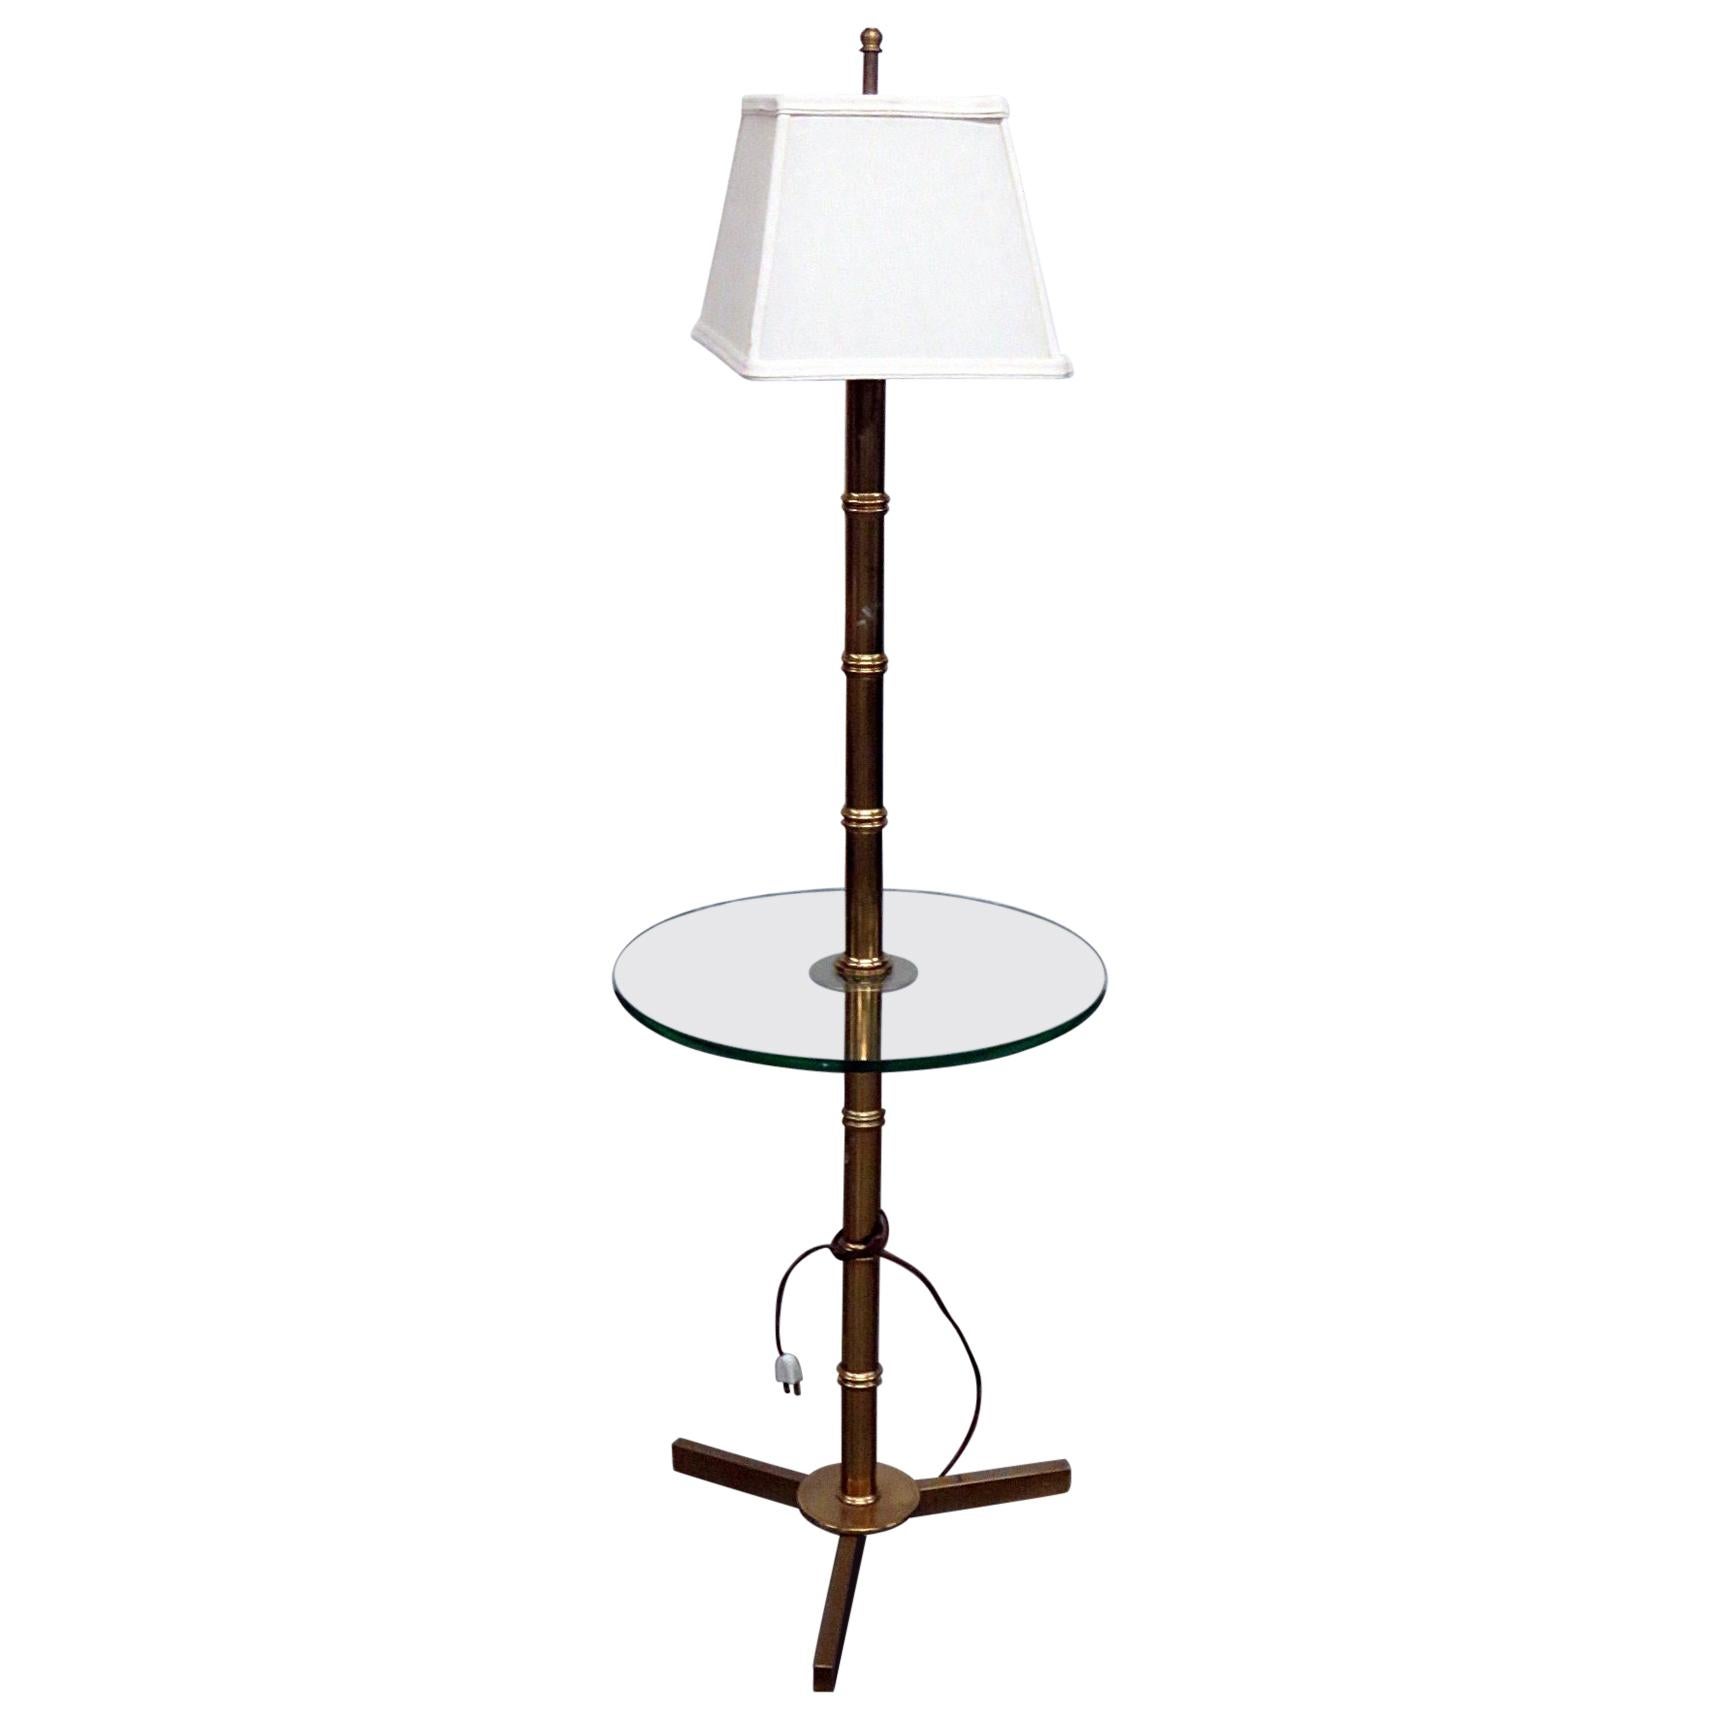 Maison Jansen Regency Style Lamp Table